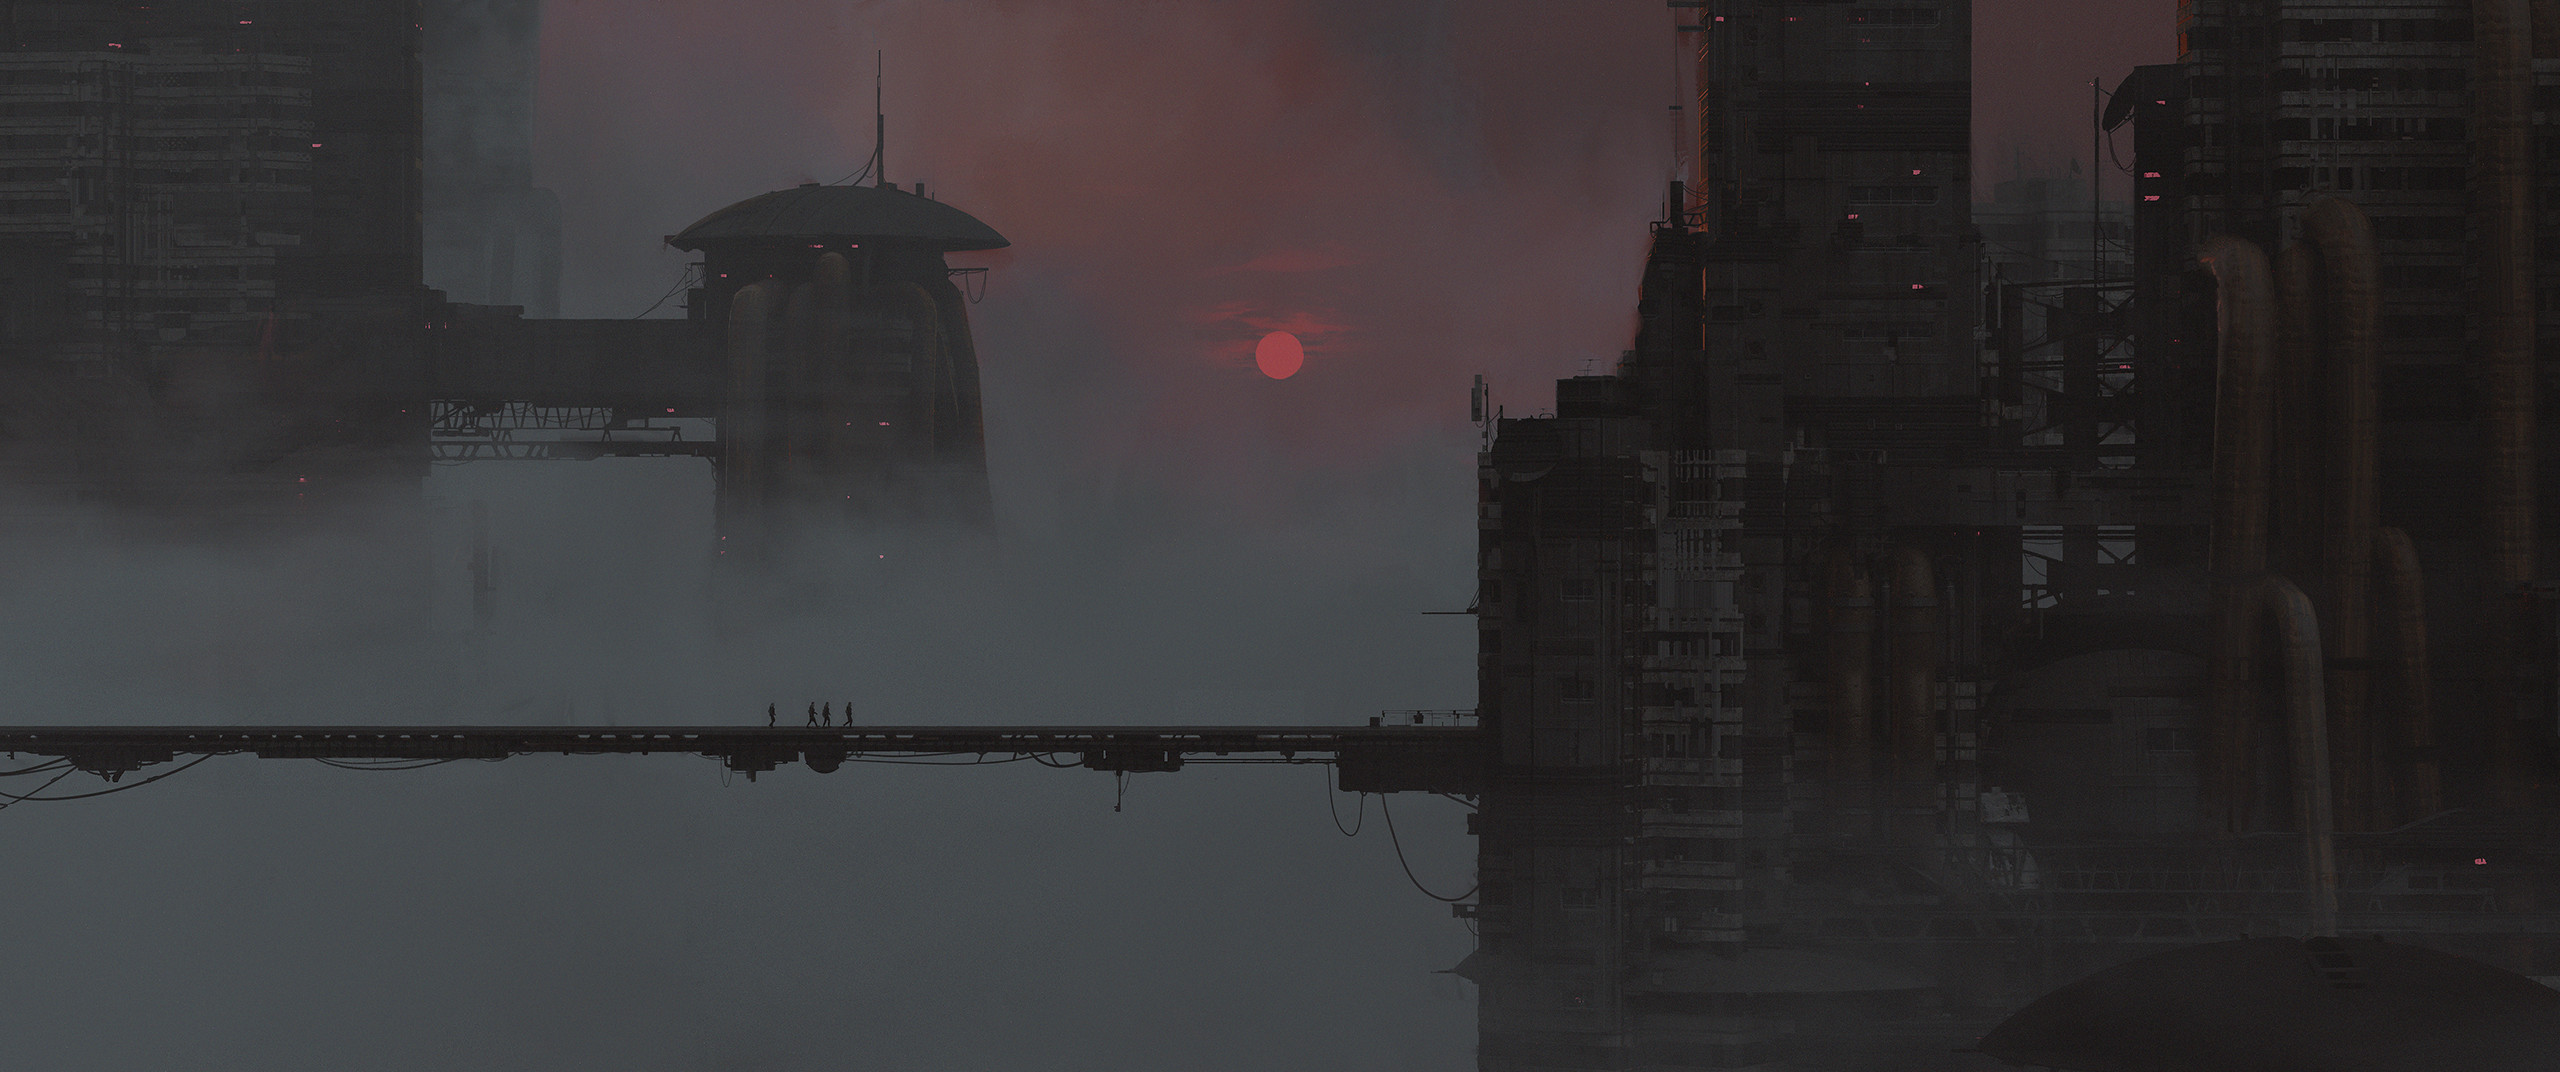 General 2560x1072 digital art artwork sunset bridge futuristic dystopian